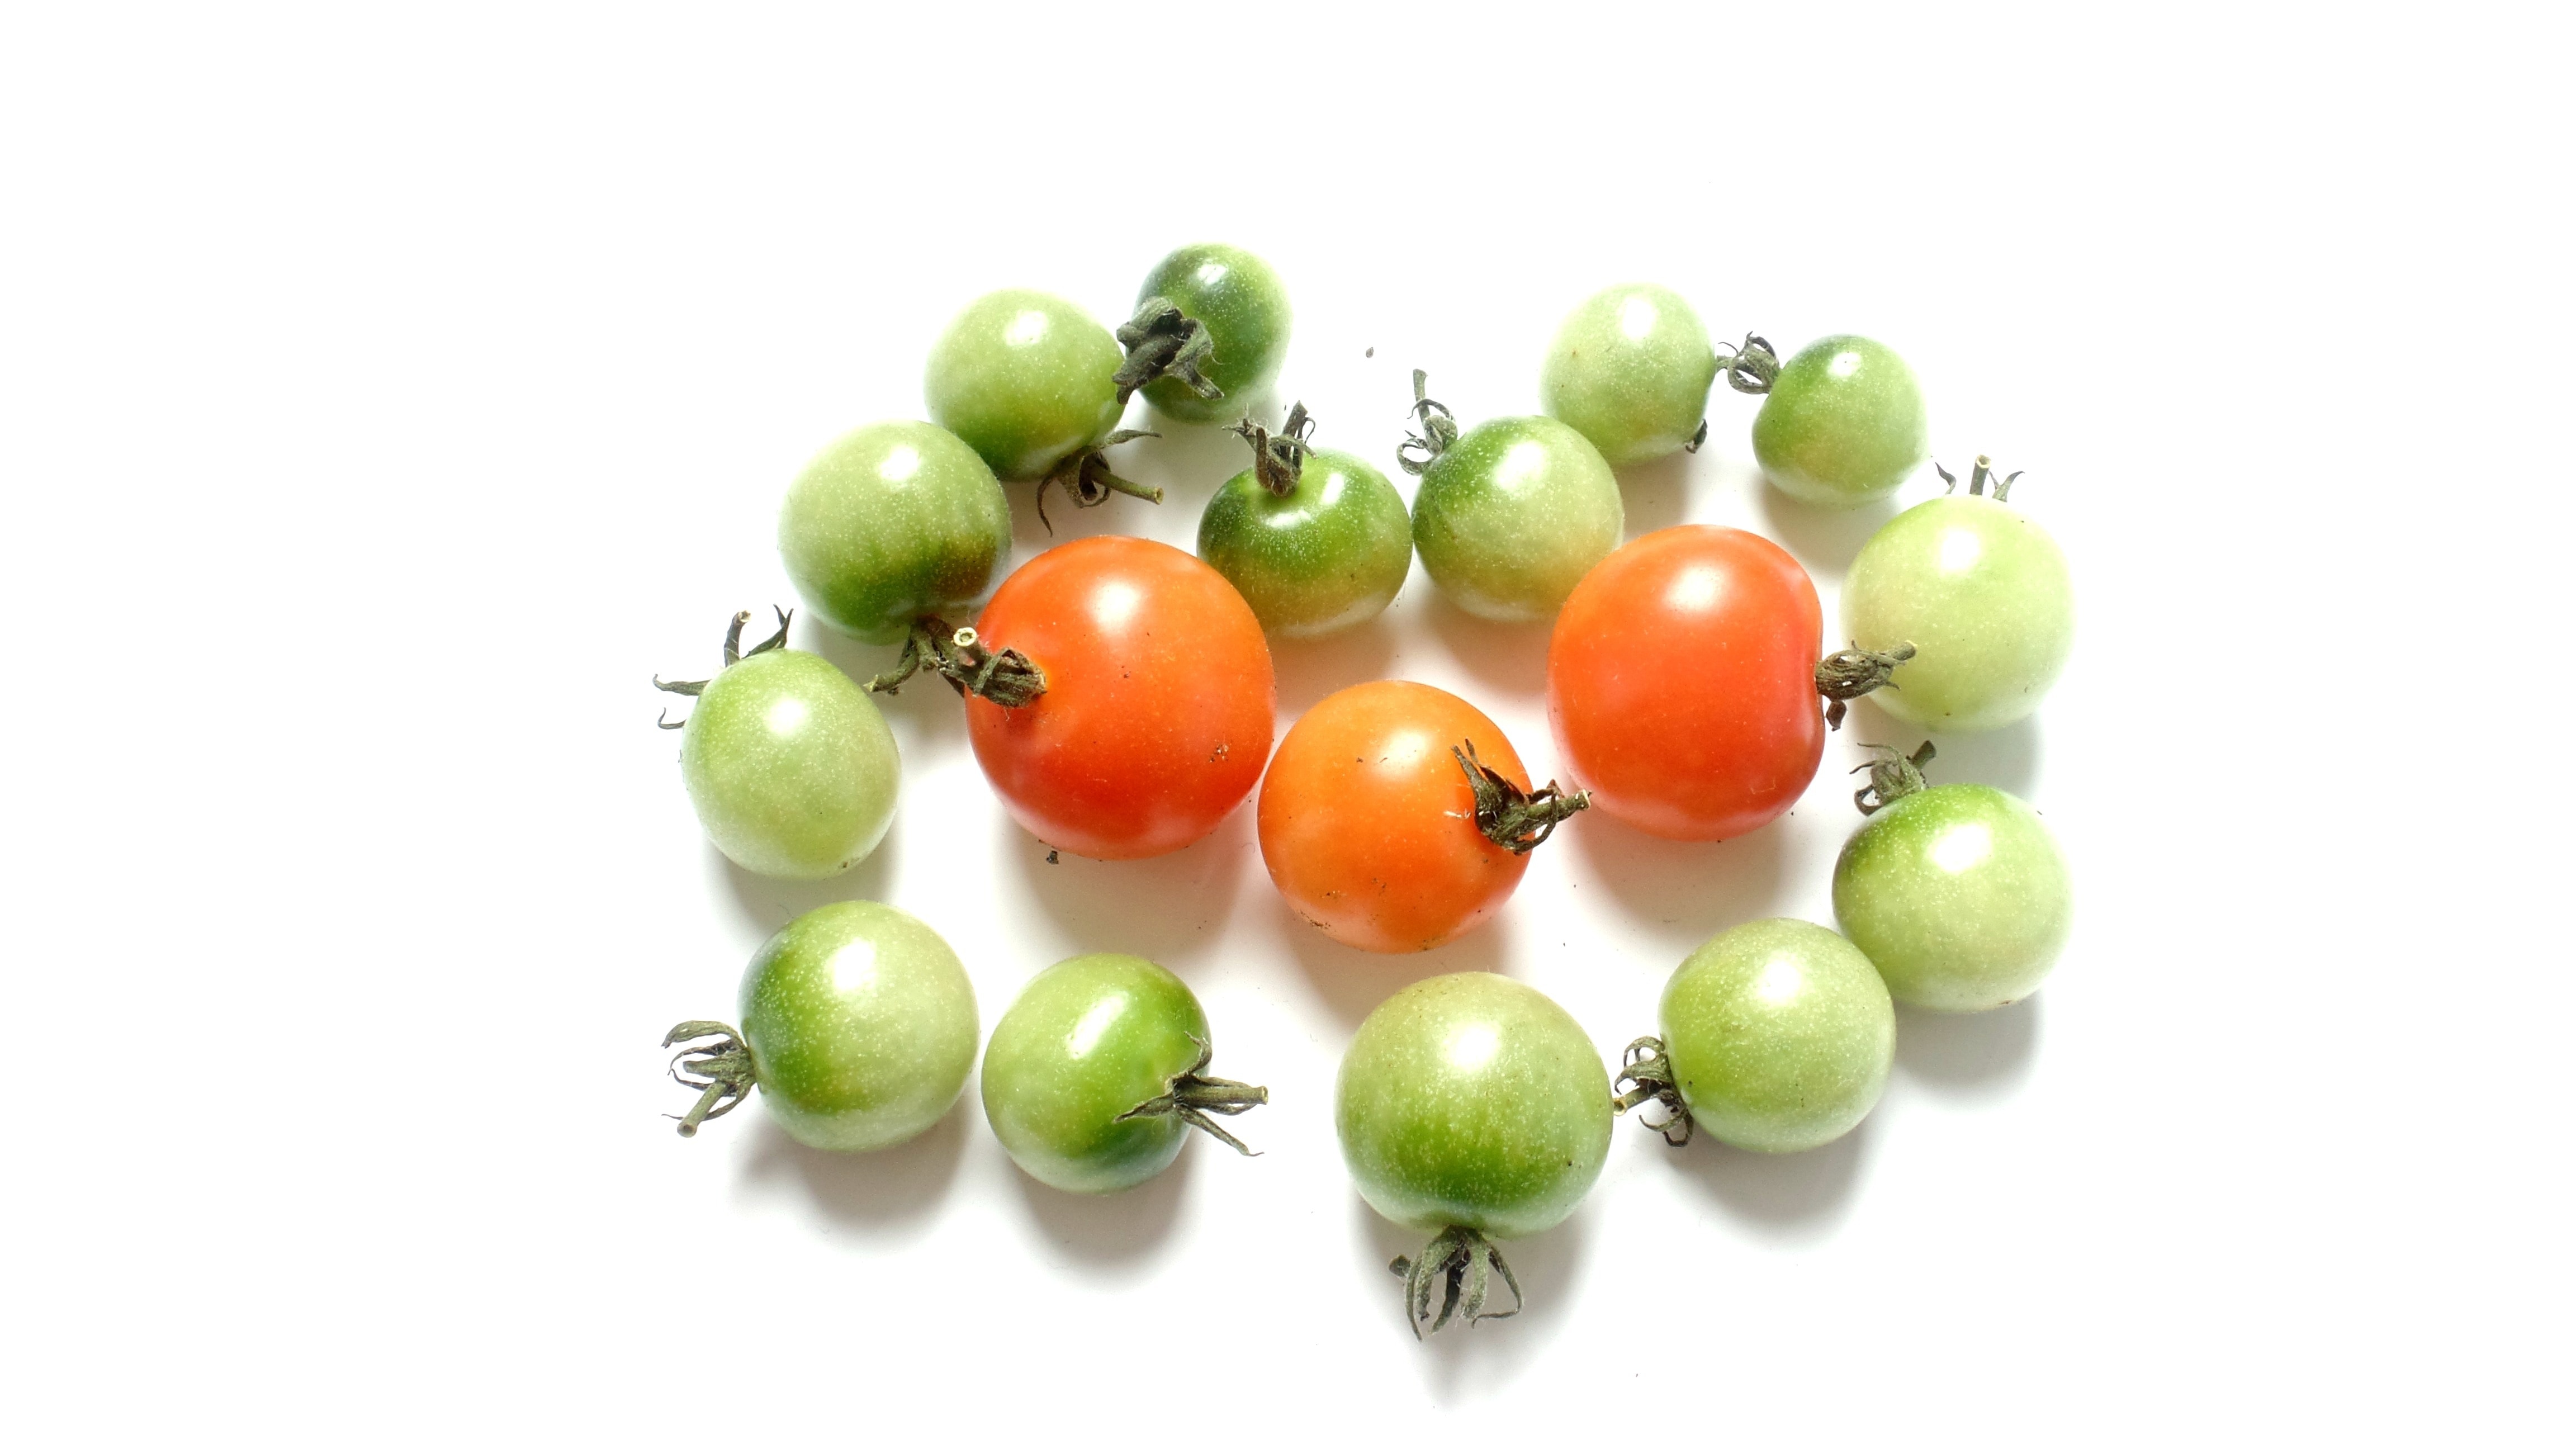 green and orange tomatoes